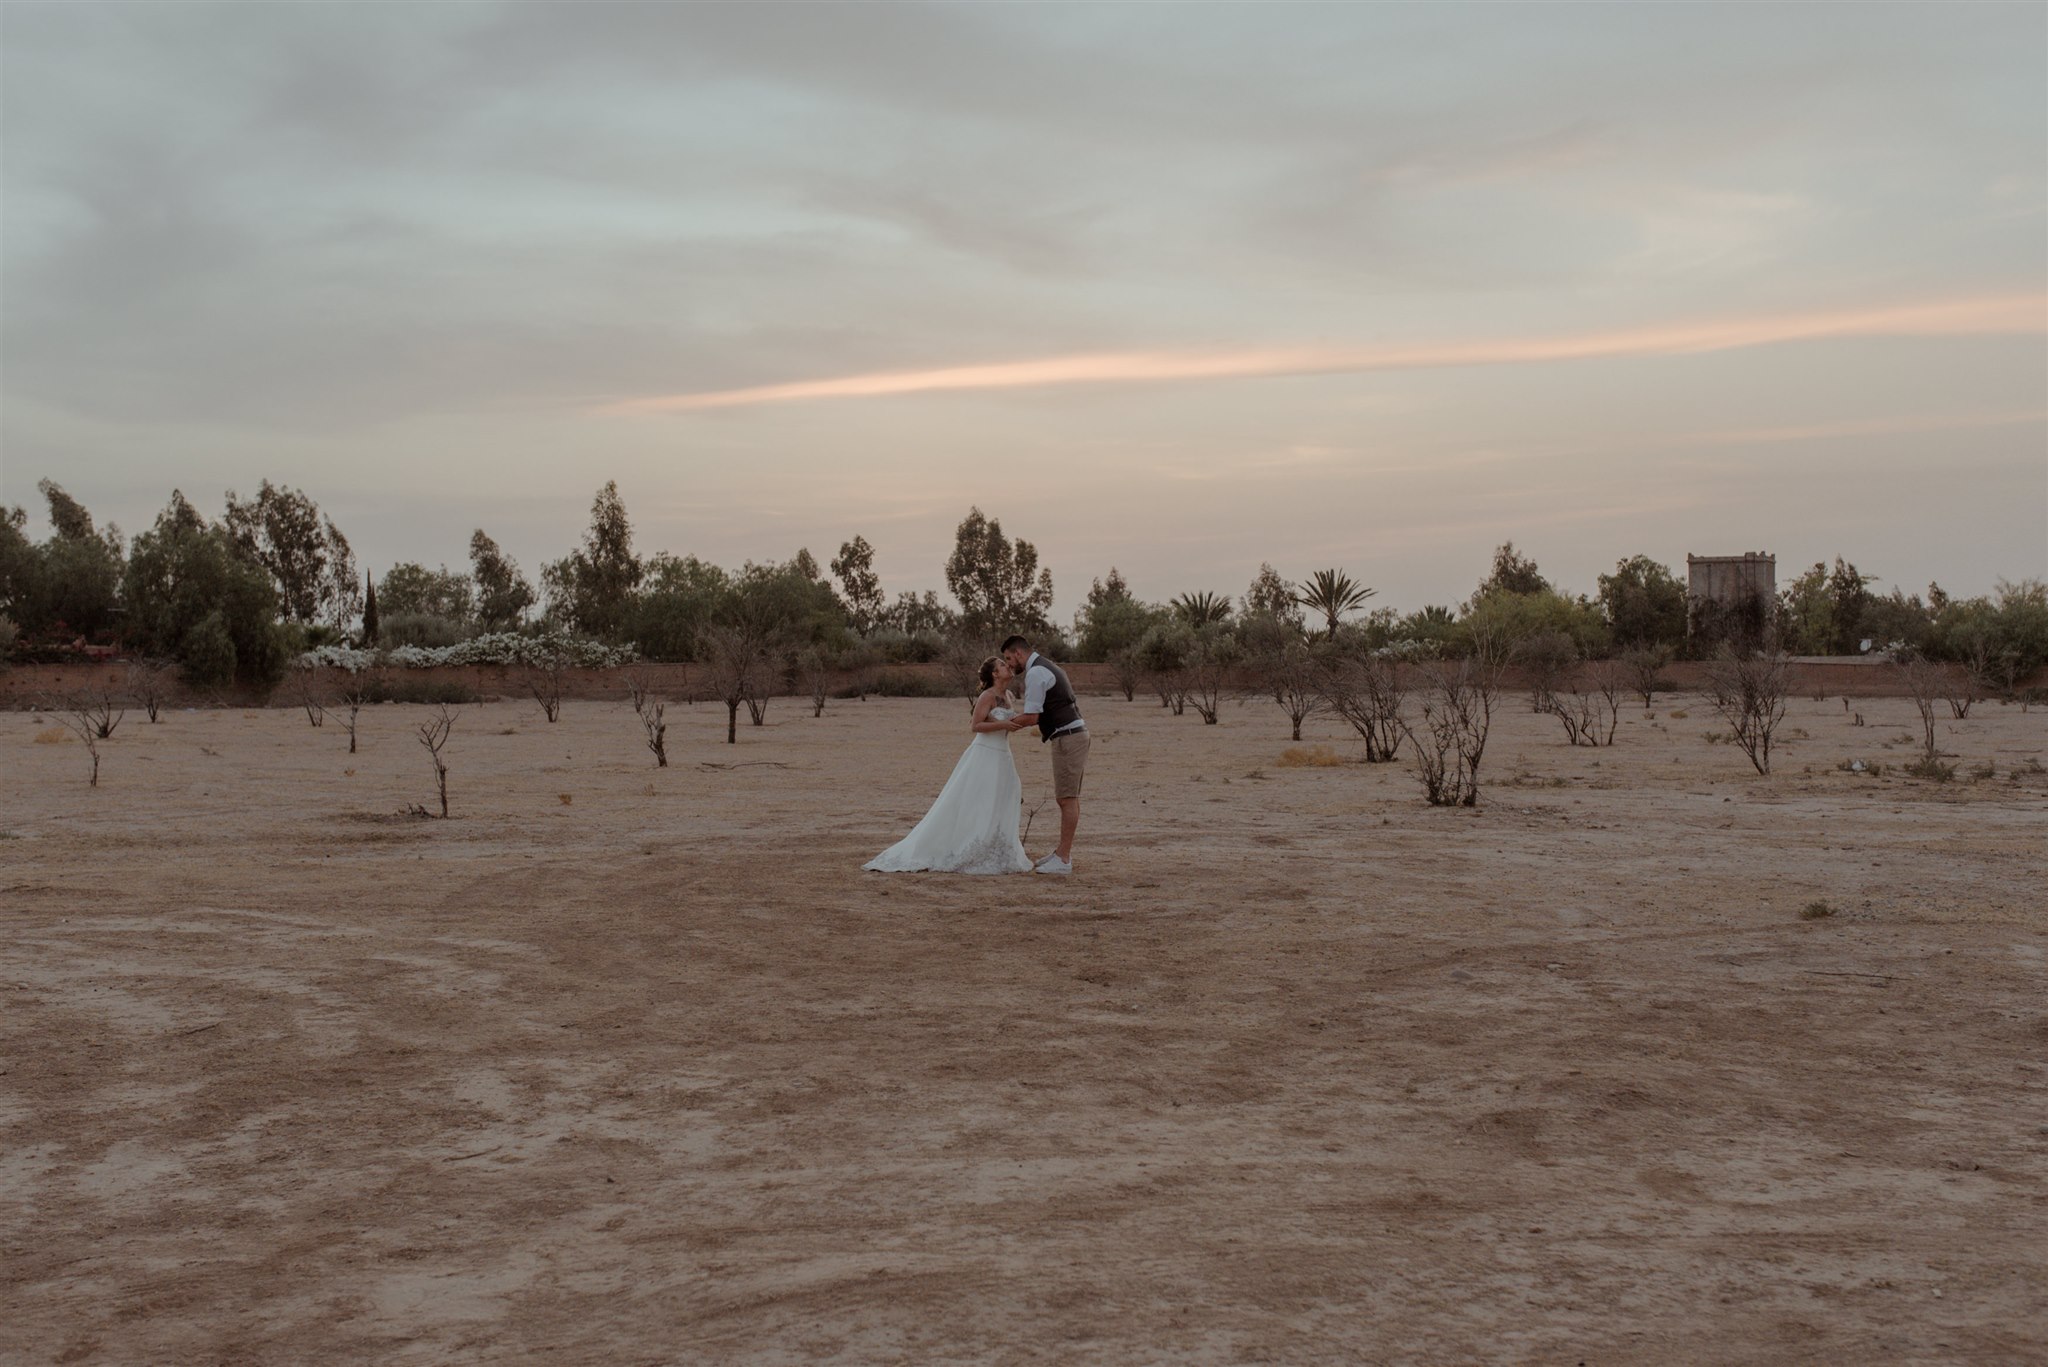 marrakech wedding photography destination wedding photographer from scotland glasgow romantic documentary style